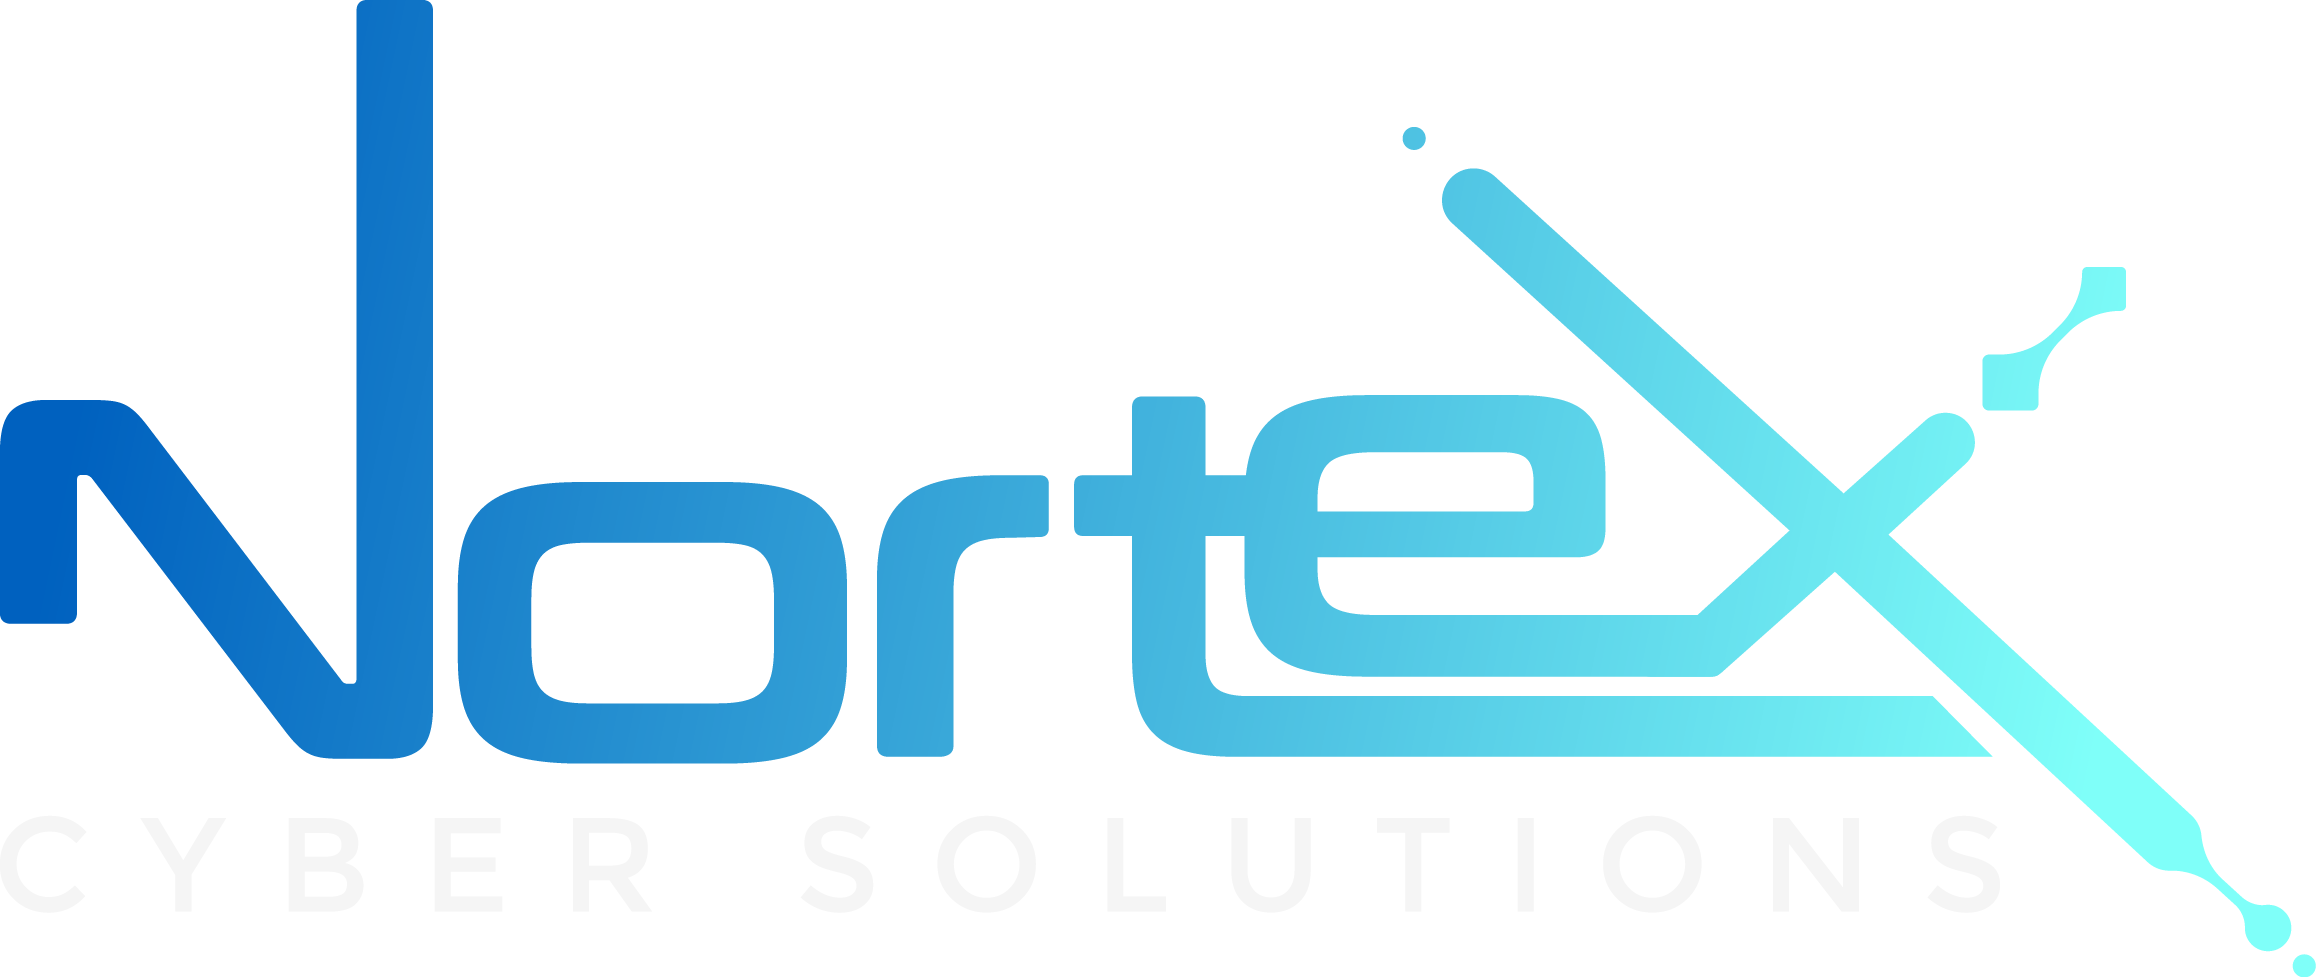 Nortex Cyber Solutions Logo